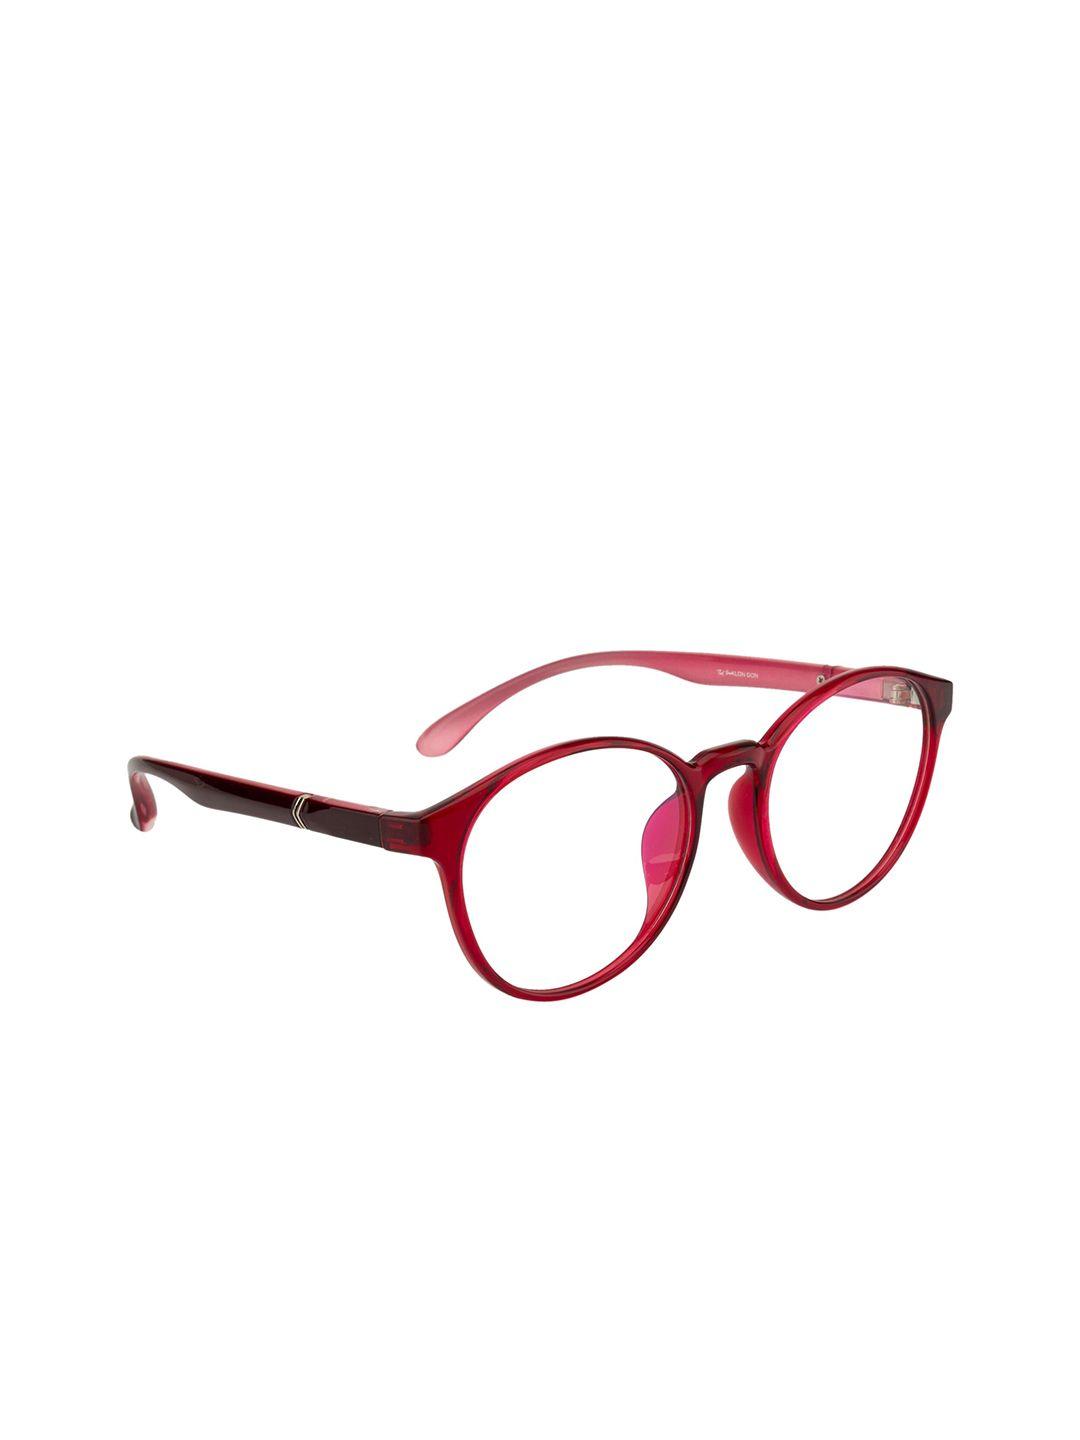 ted smith unisex red & brown full rim round frames eyeglasses